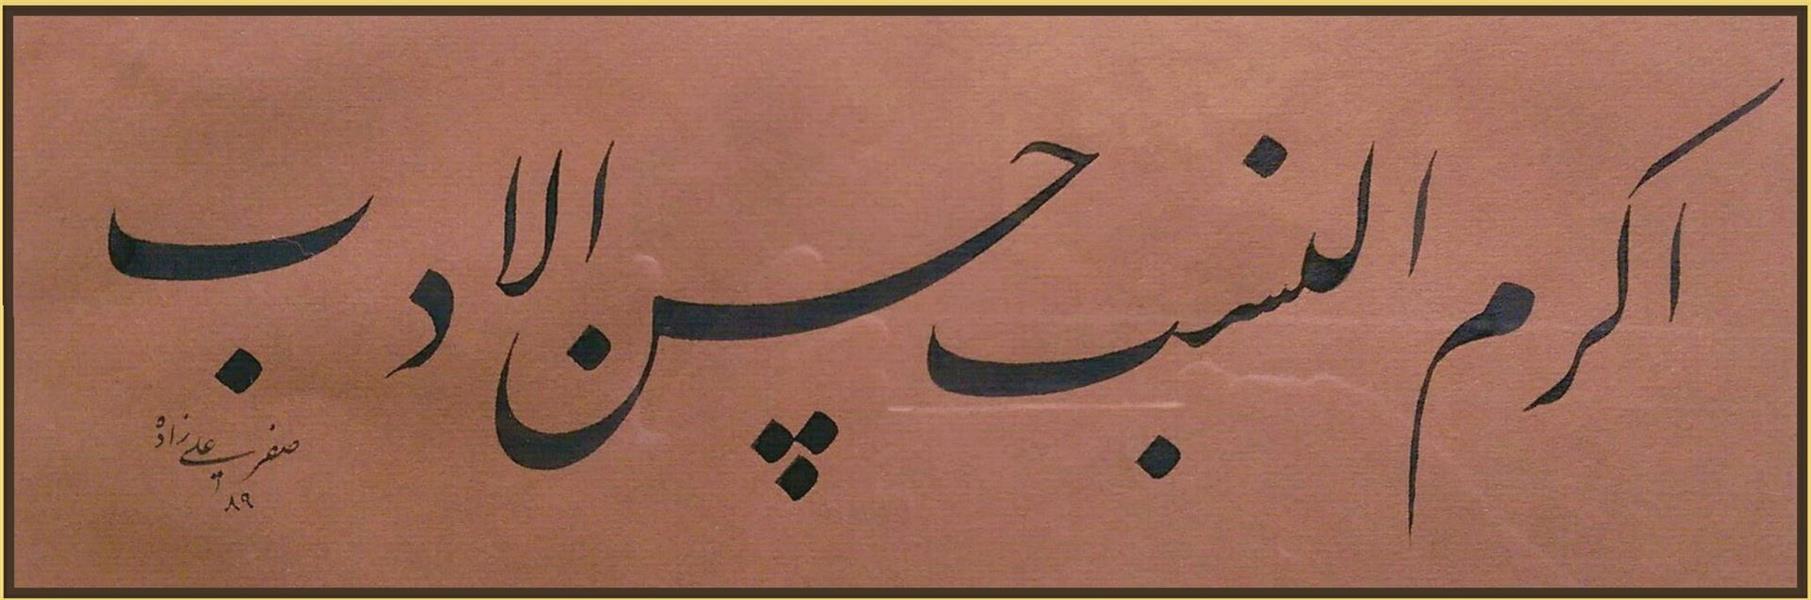 هنر خوشنویسی محفل خوشنویسی Gholamreza safaralizadeh خط کمترین صفرعلیزاده